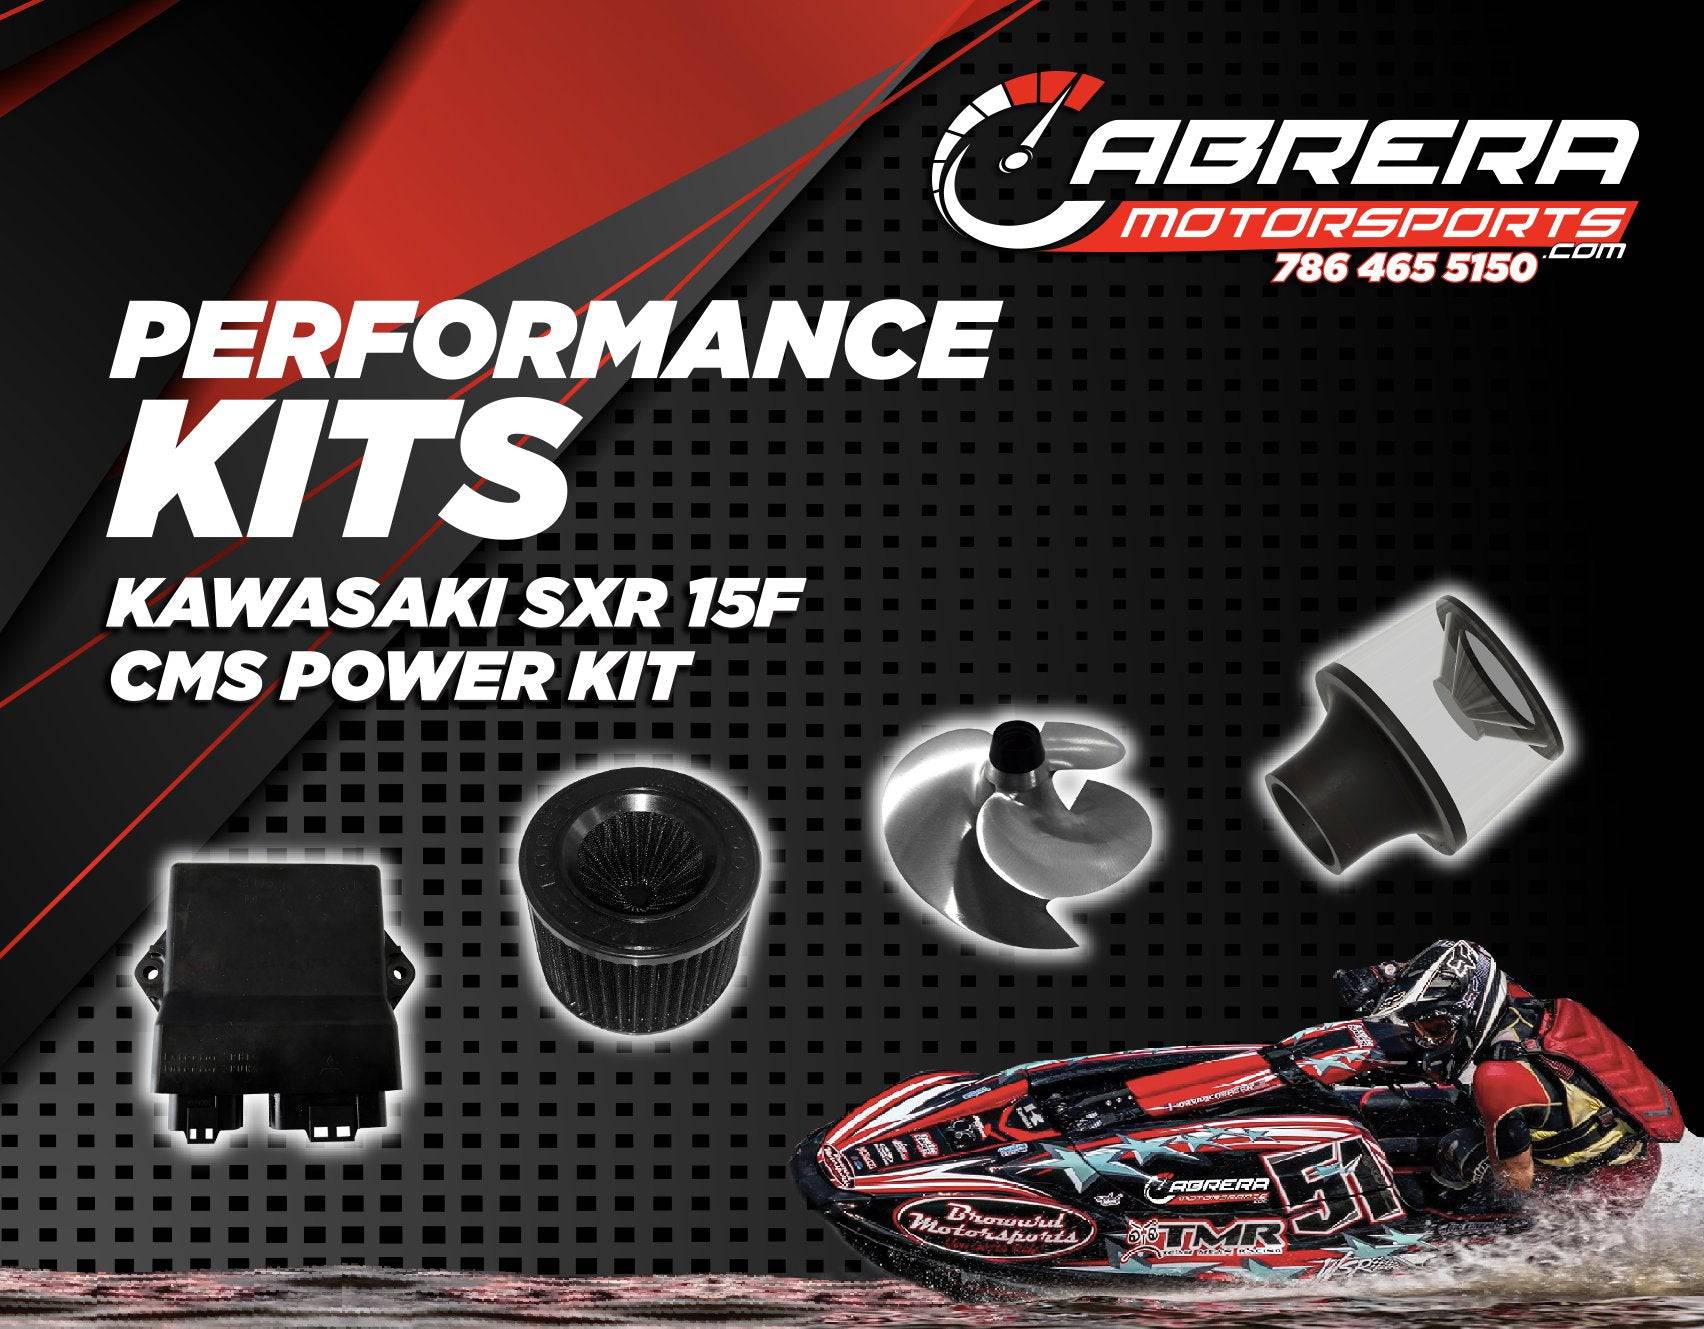 Kawasaki SX-R 15F Jetski Racing Parts | Cabrera Motorsports